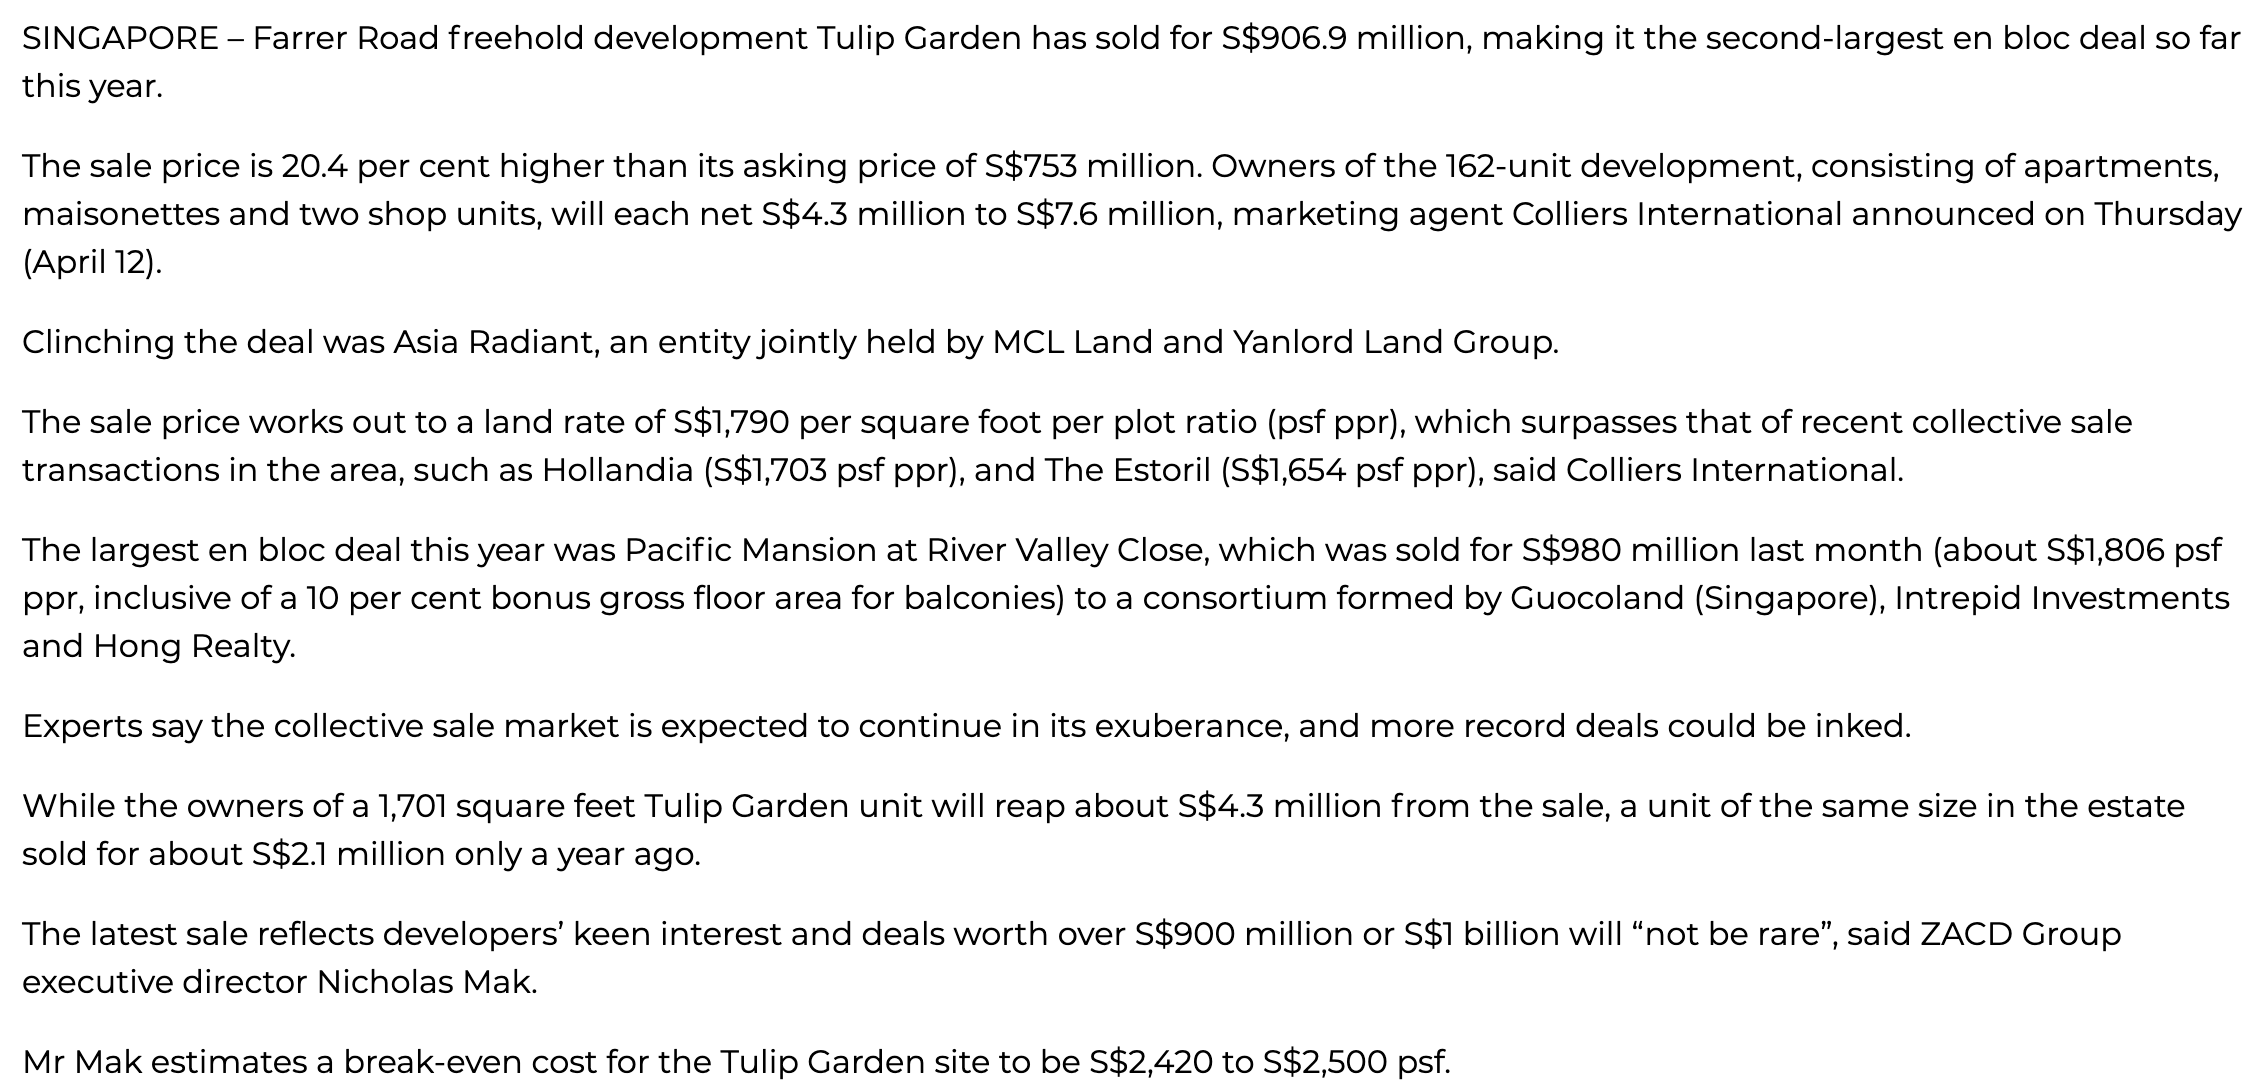 tulip-garden-sold-s9069-million-second-largest-en-bloc-deal-year-page-1